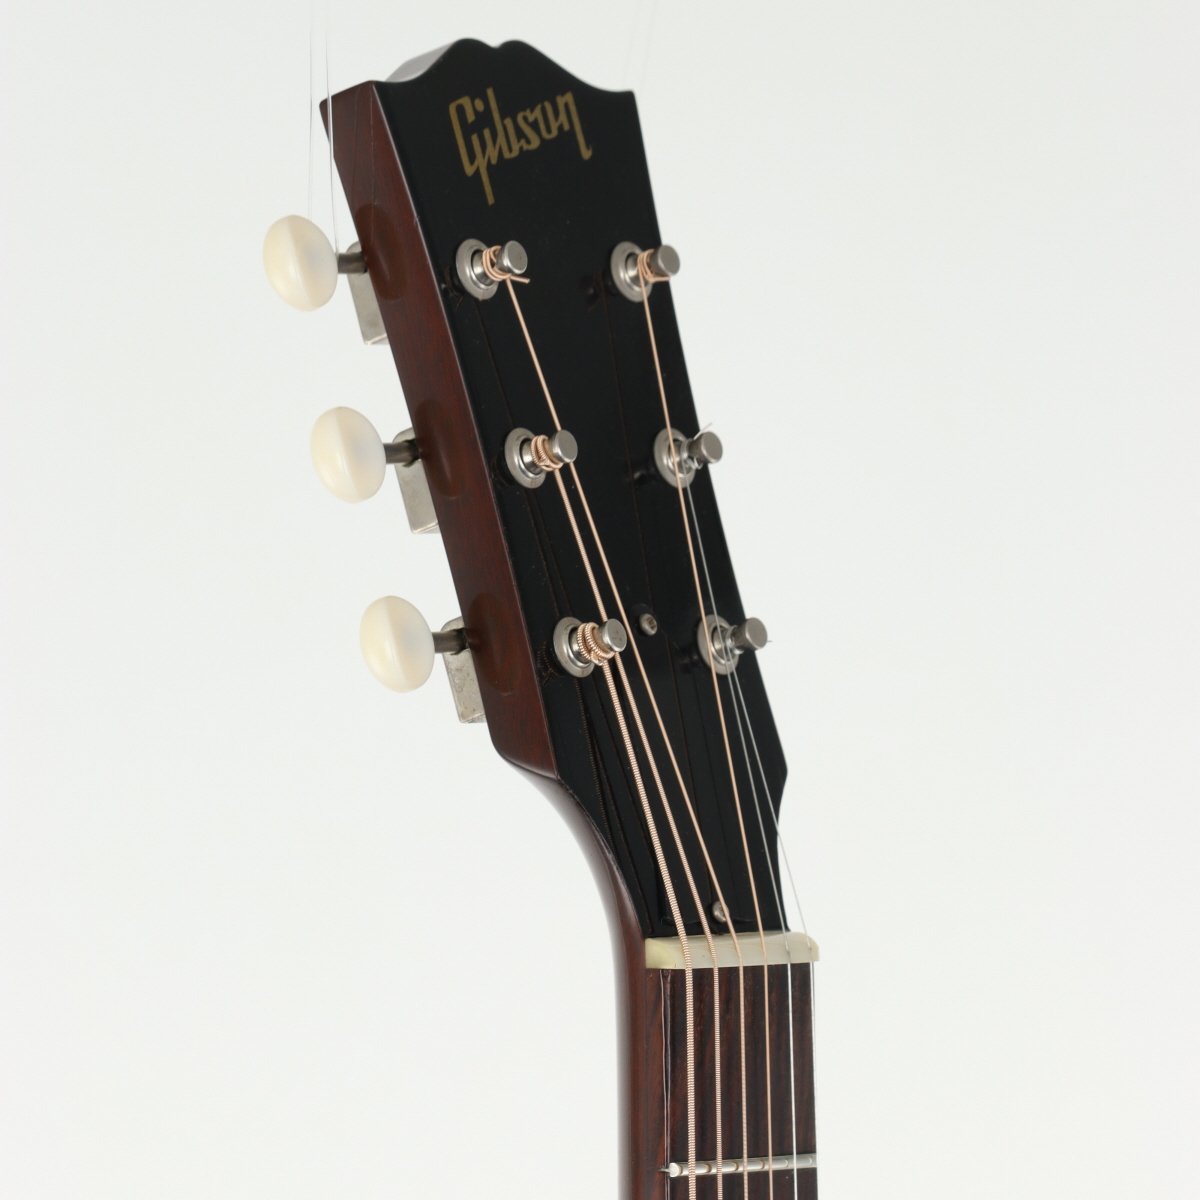 [SN 12845016] USED Gibson Montana Gibson / The 59 J-45 [20]